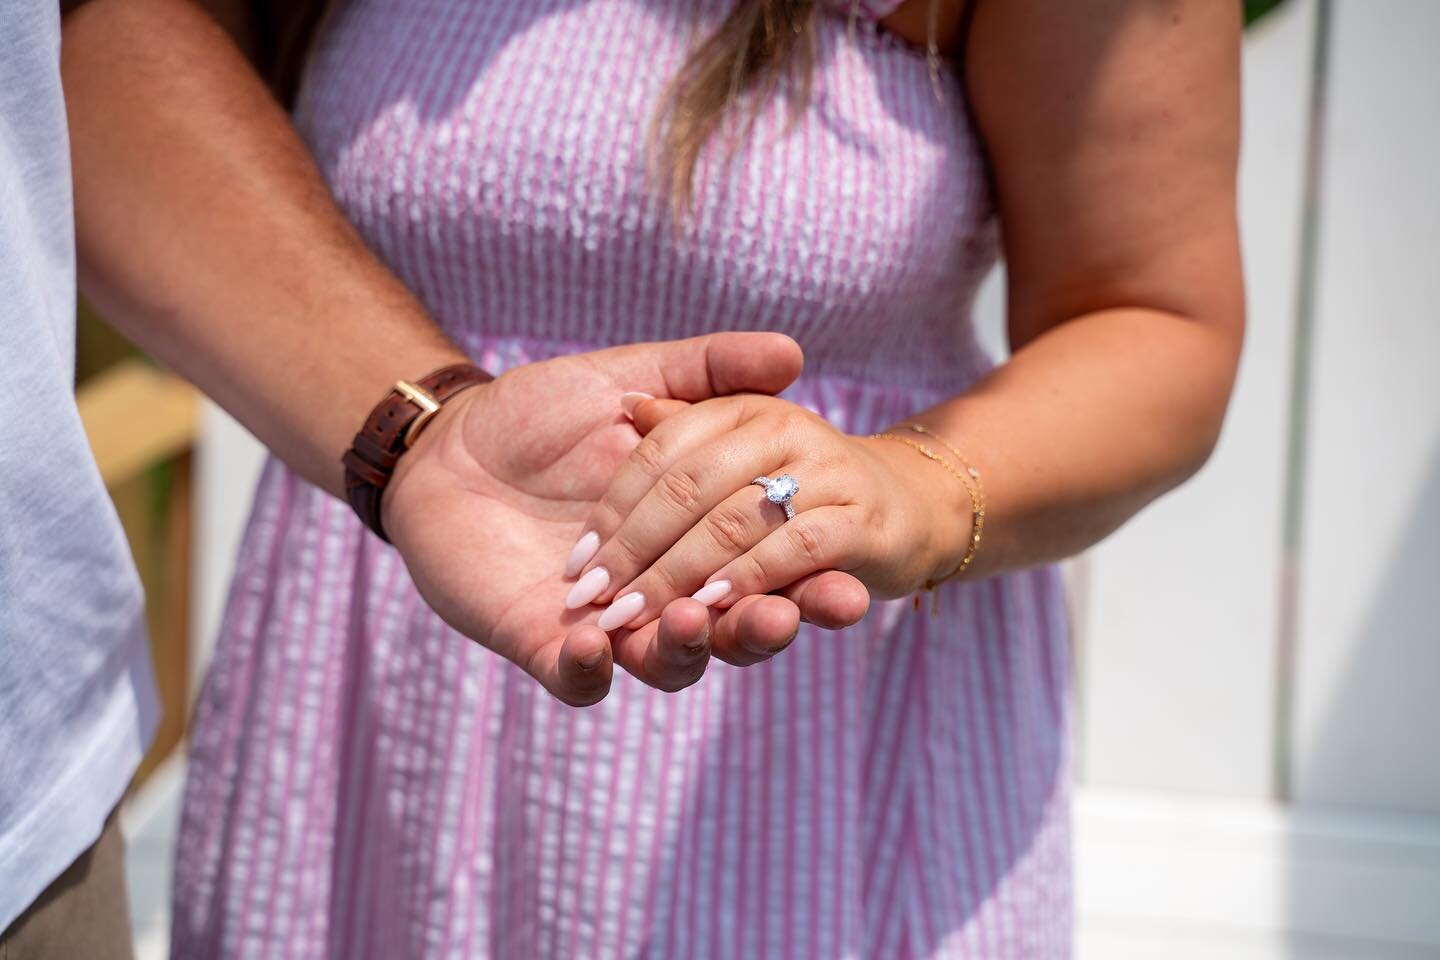 Taking a closer look 💍🪻
#lavenderfields #proposals #closeups